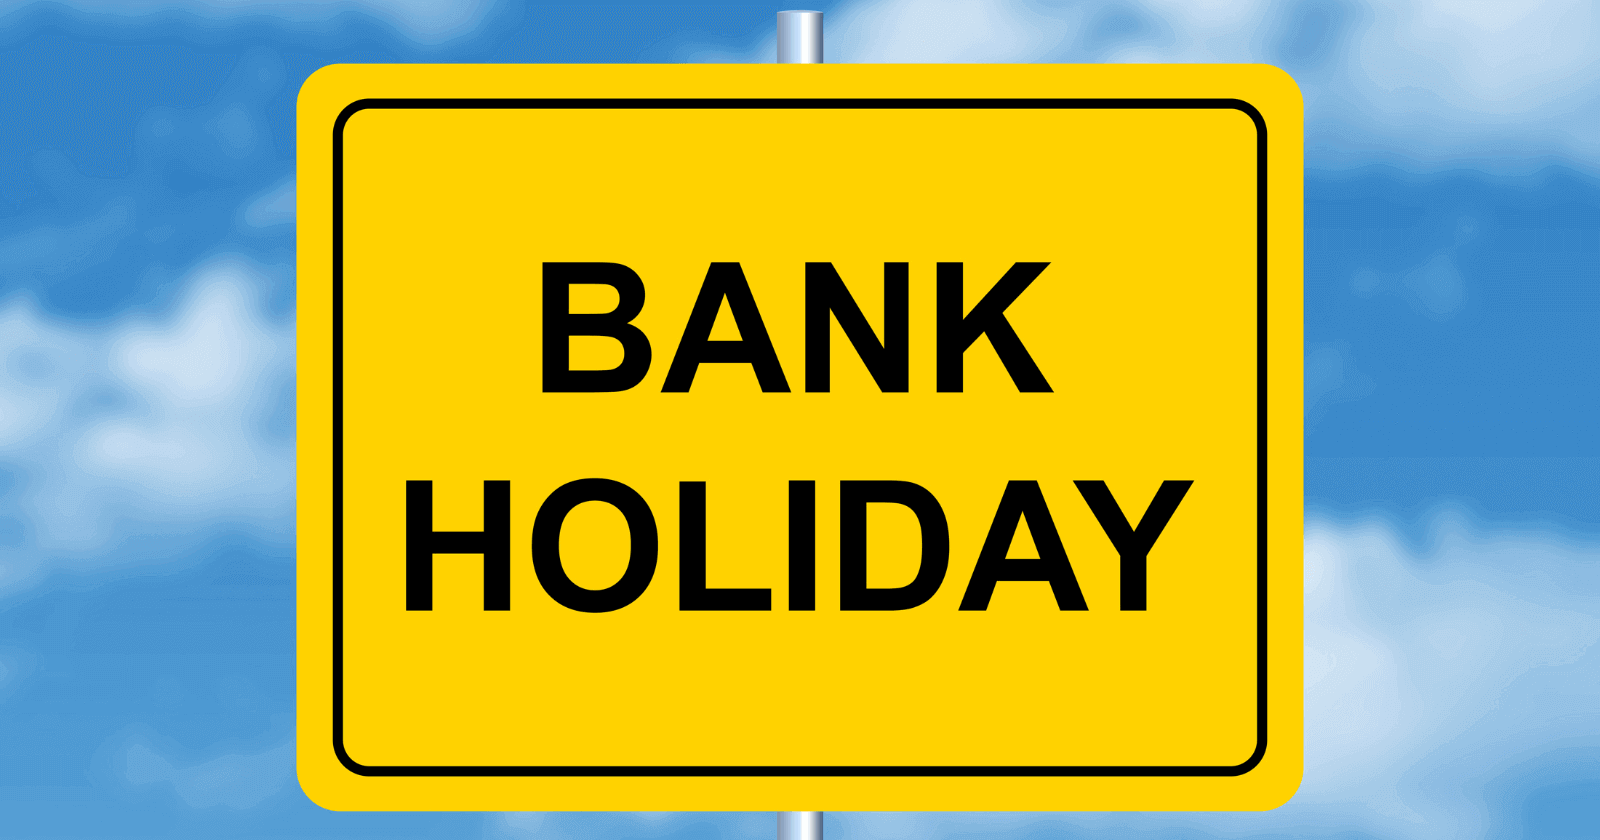 Karnataka Holidays: List of Bank Holidays in Karnataka in 2023